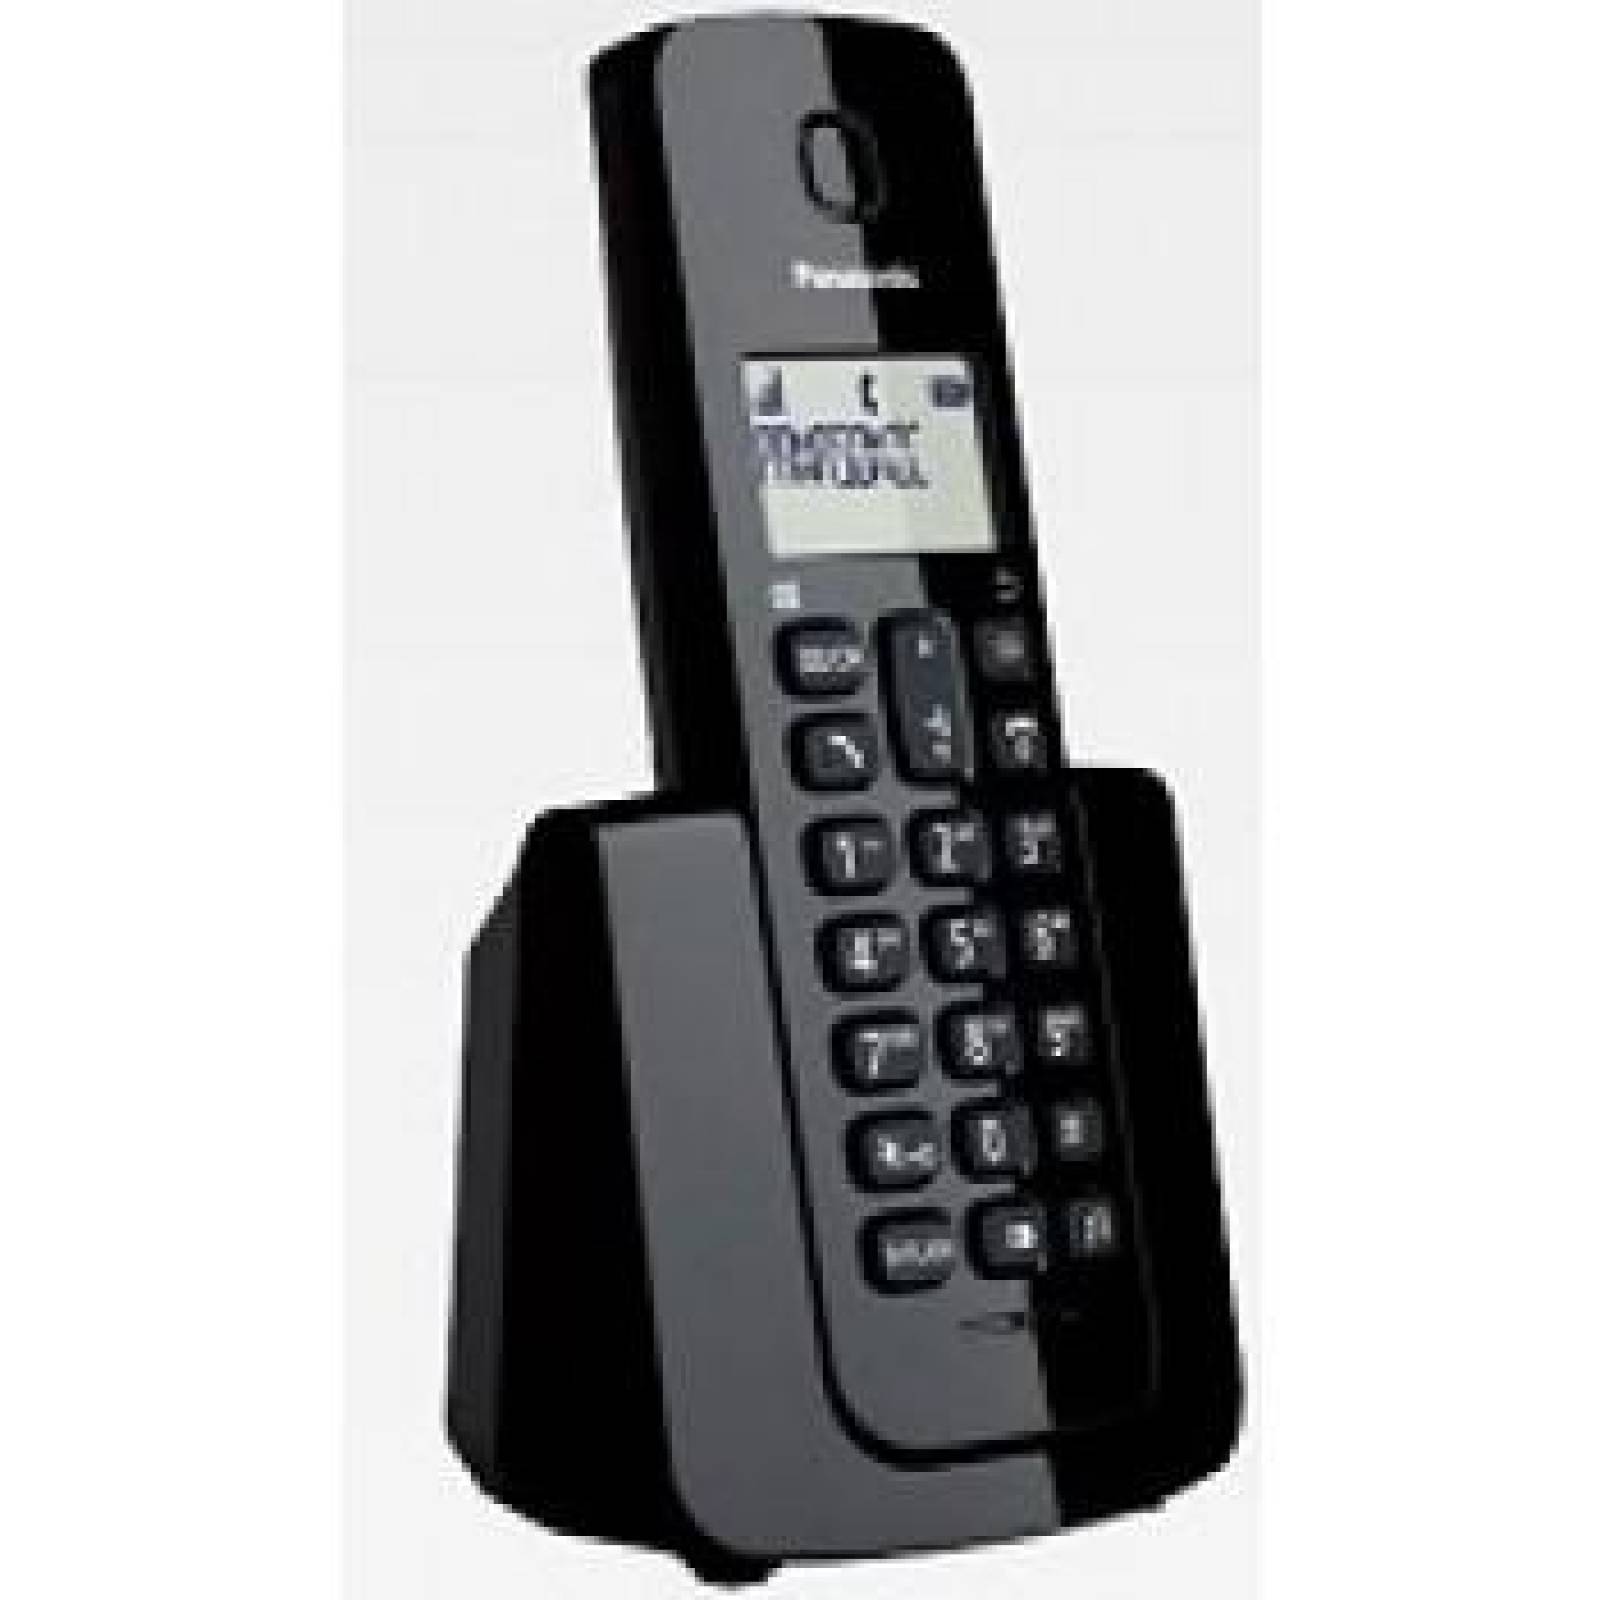 Telefono Inalambrico Panasonic Kx-tgb110meb Digital